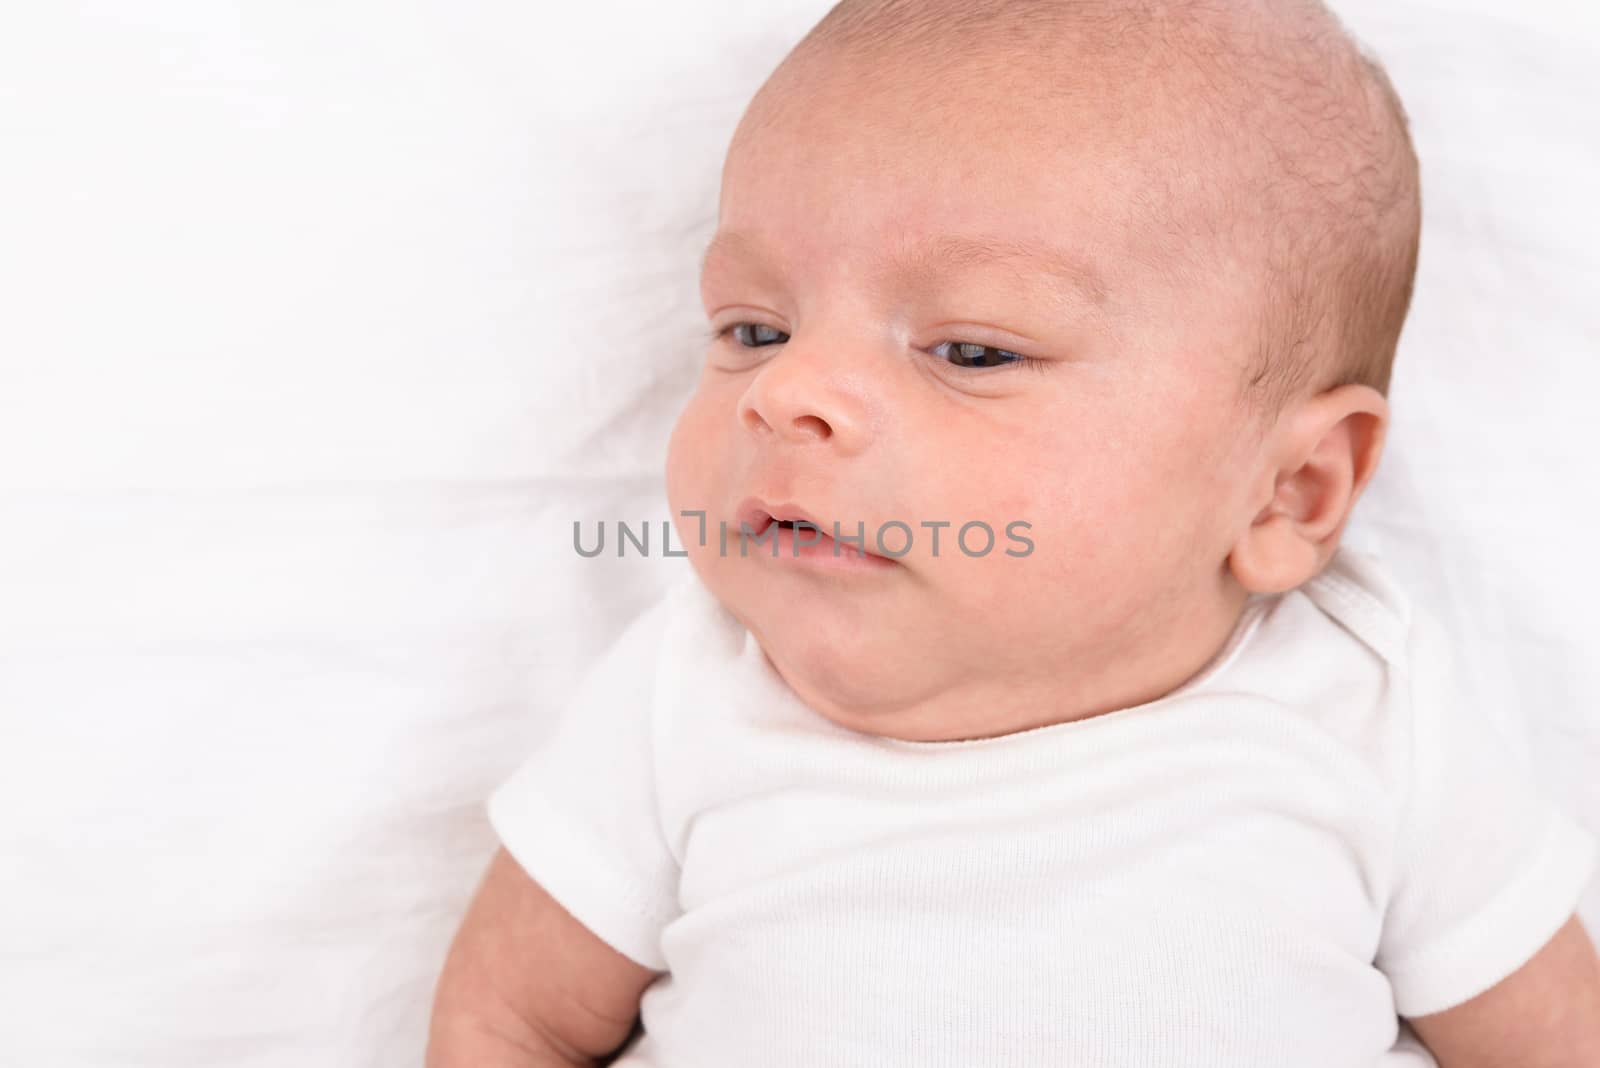 Newborn baby on white sheet by dutourdumonde